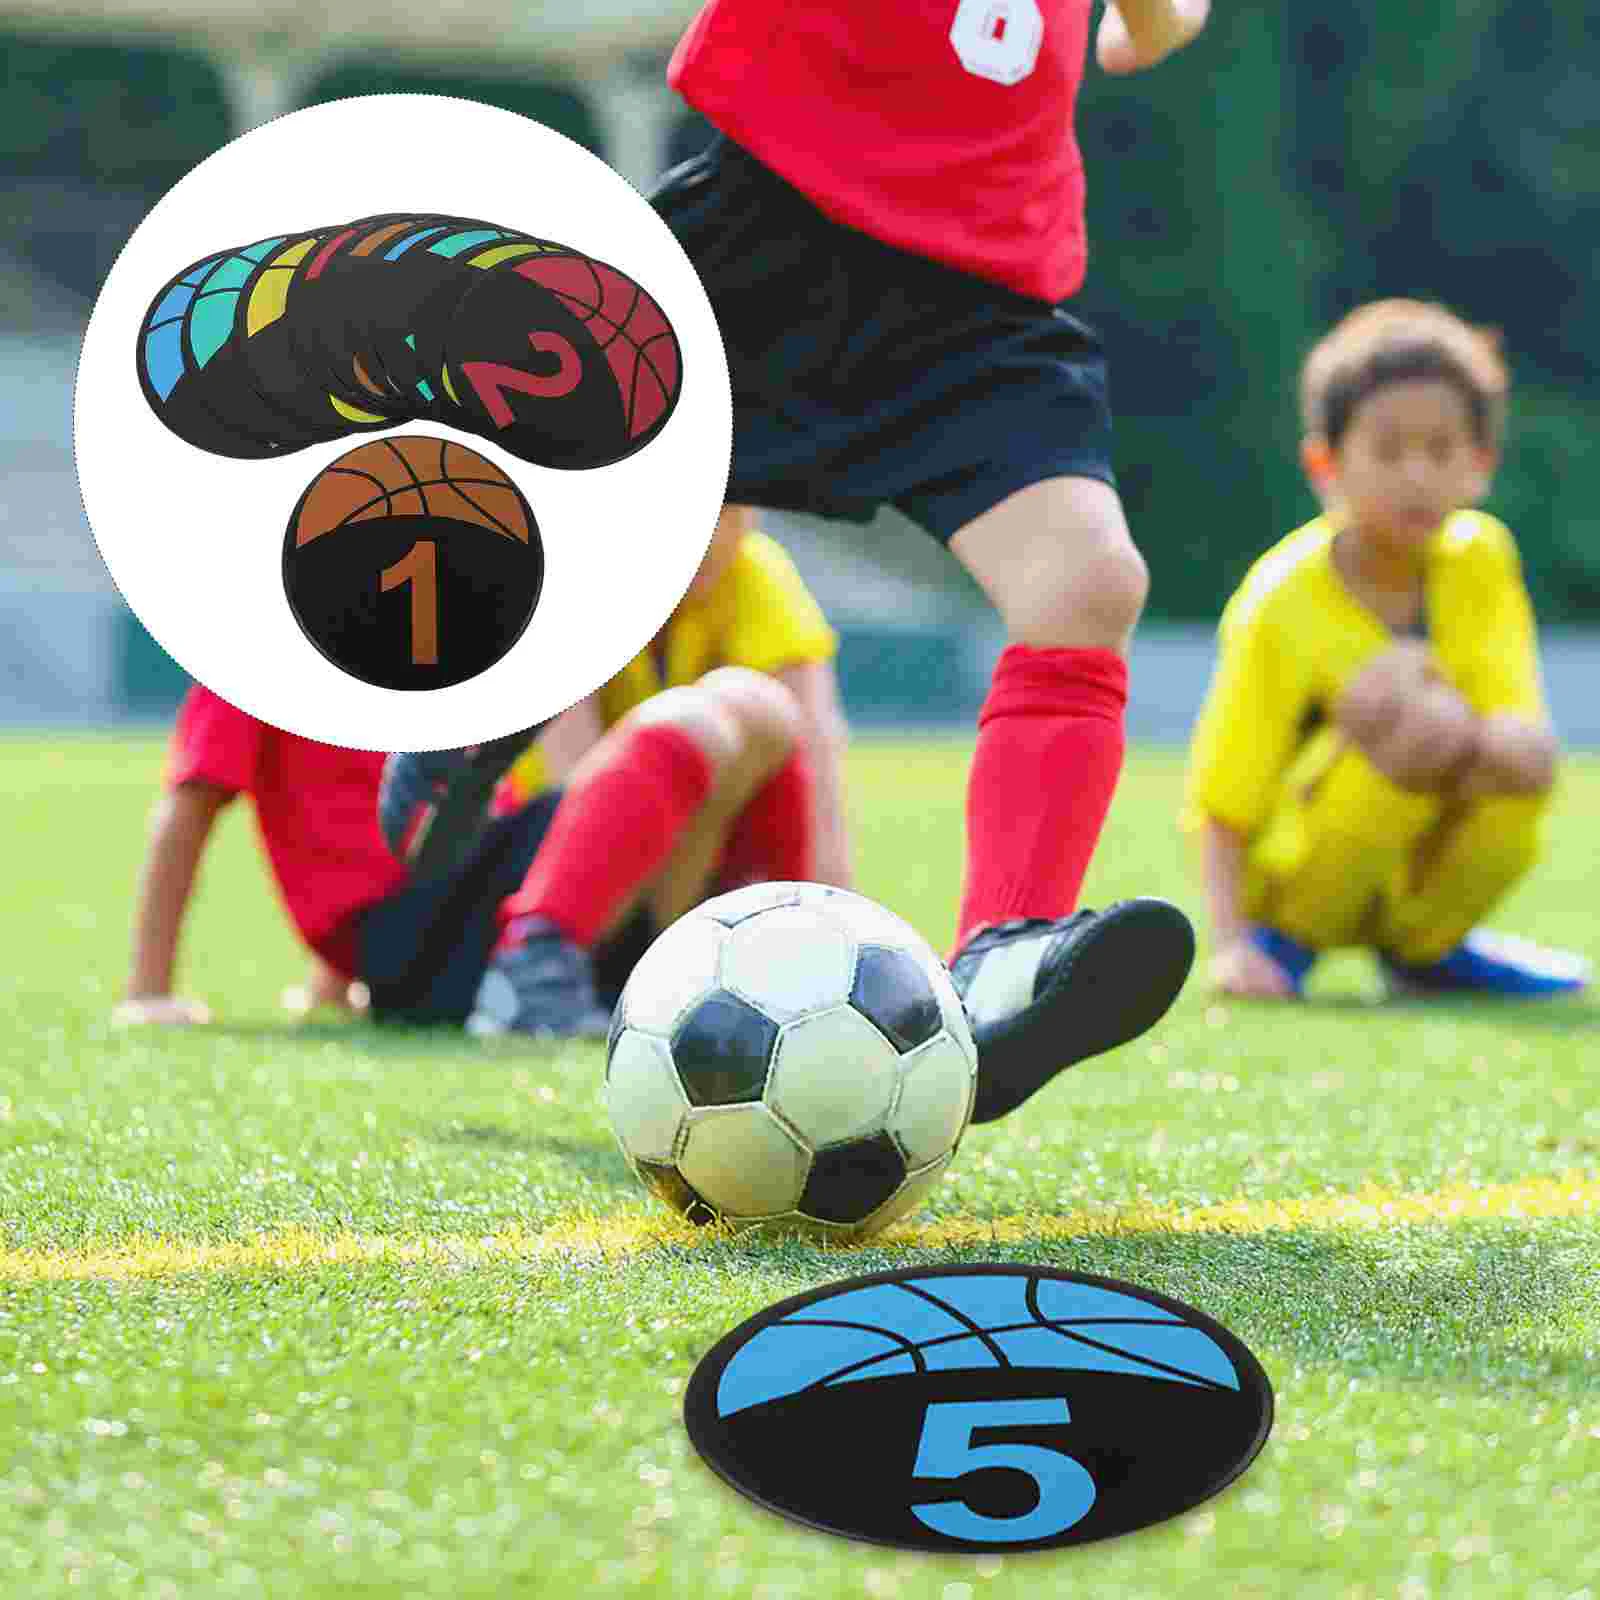 

10pcs Football Exercising Marking Discs Soccer Training Markers Football Sign Discs